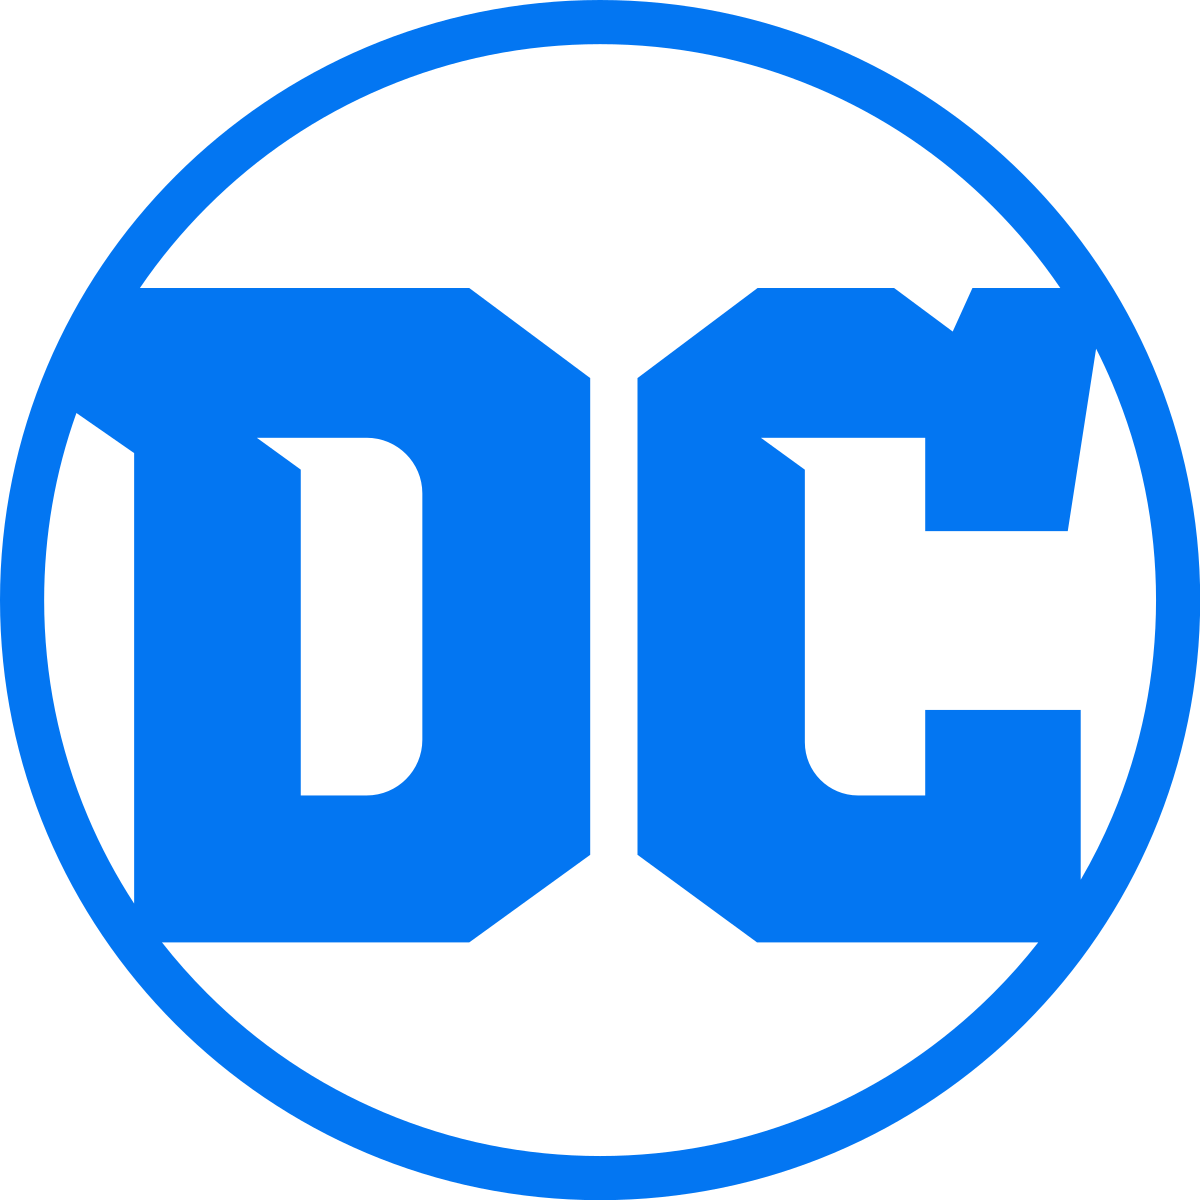 Black and White DC Comics Superhero Logo - DC Comics